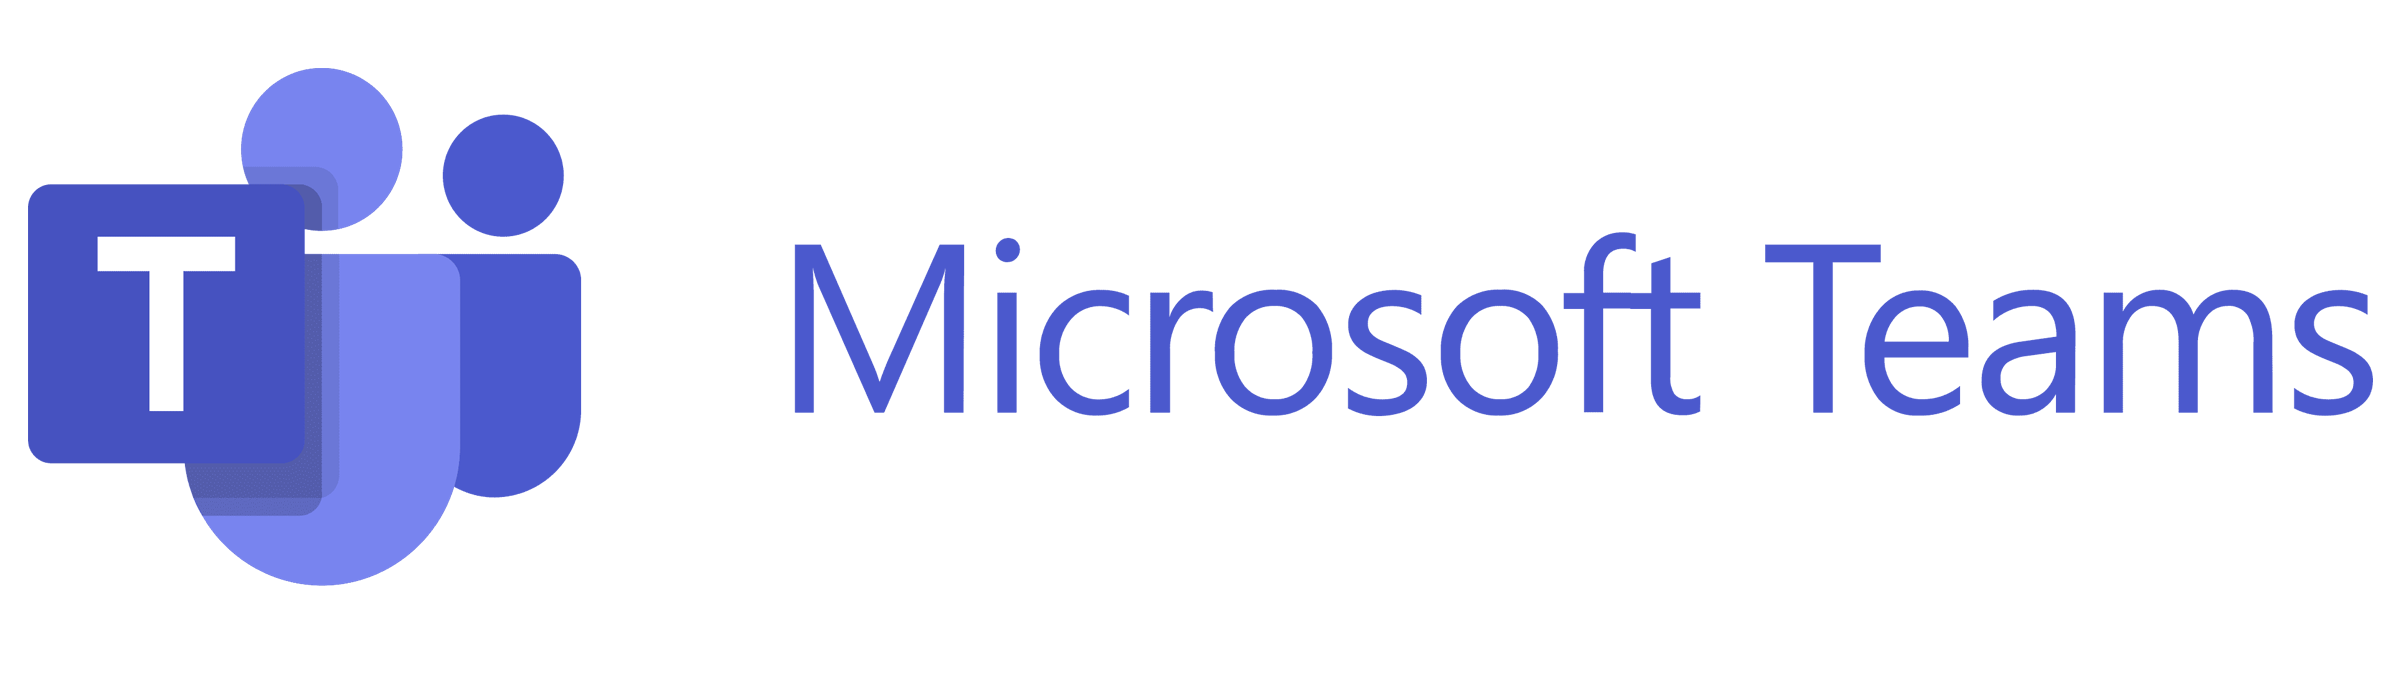 Incelor Kft - Microsoft Teams